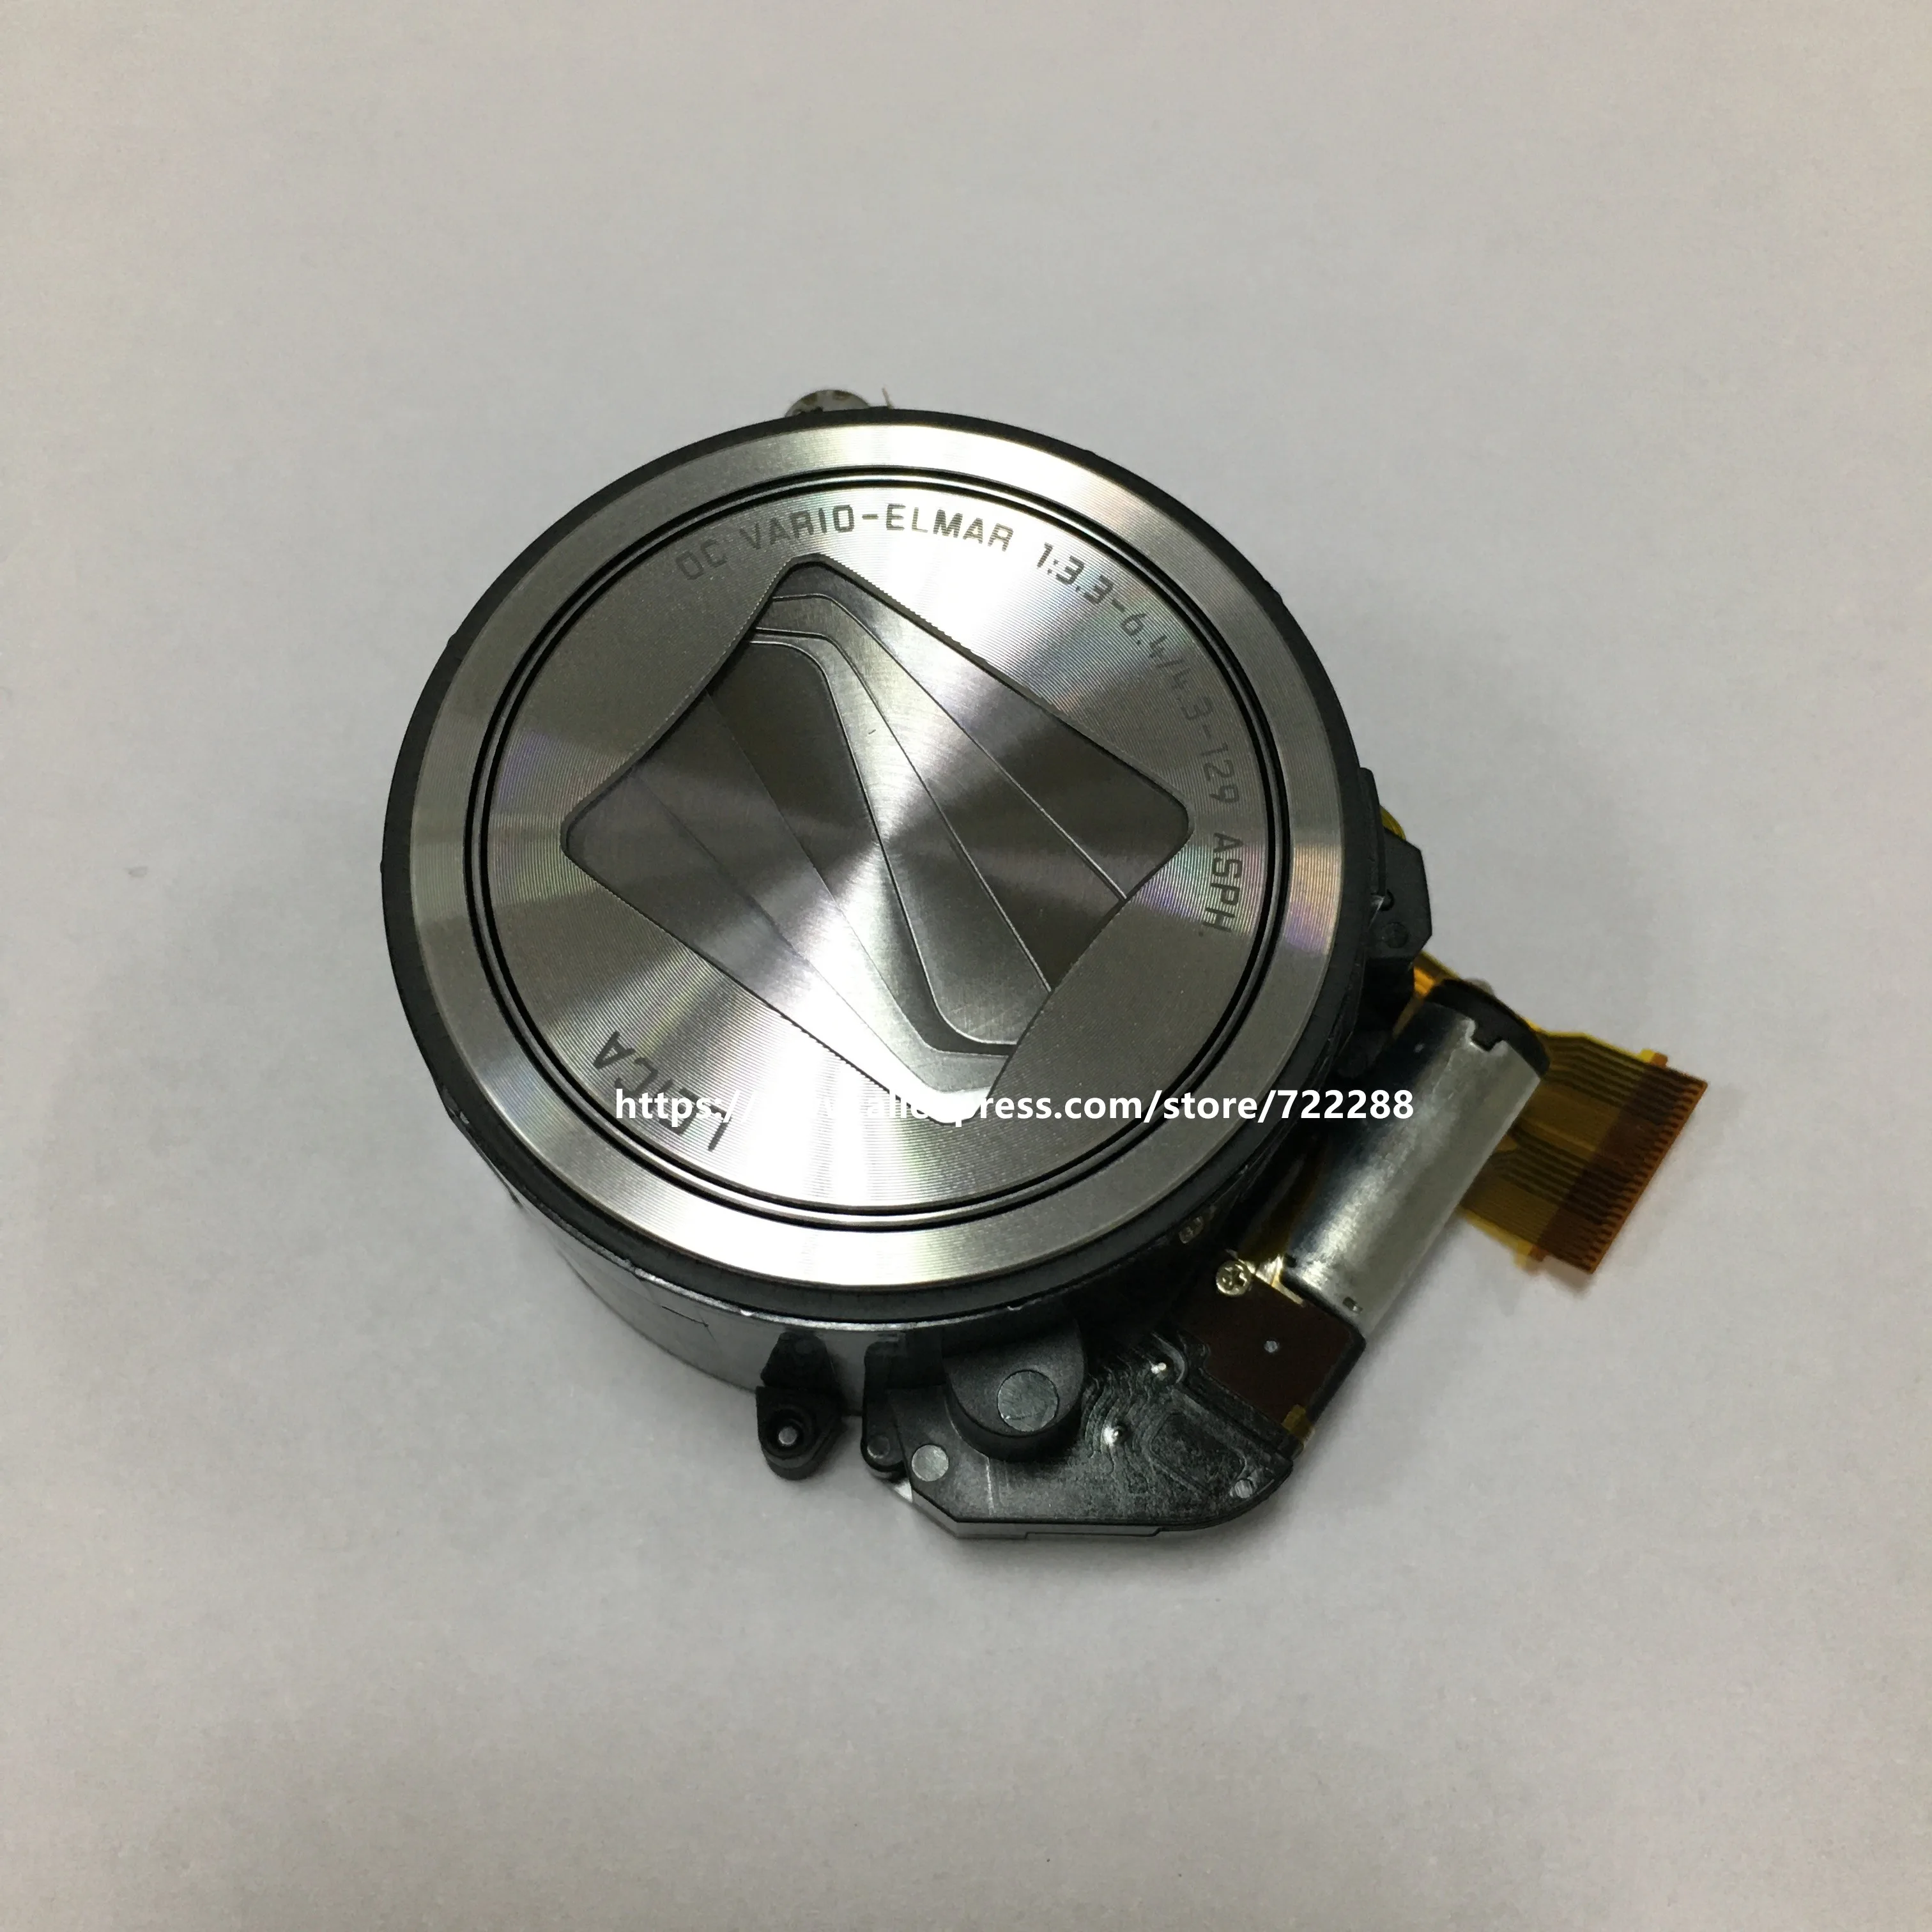 Lens Zoom Unit Repair Part For Panasonic DMC-ZS40 DMC-TZ60 Digital Camera gray 